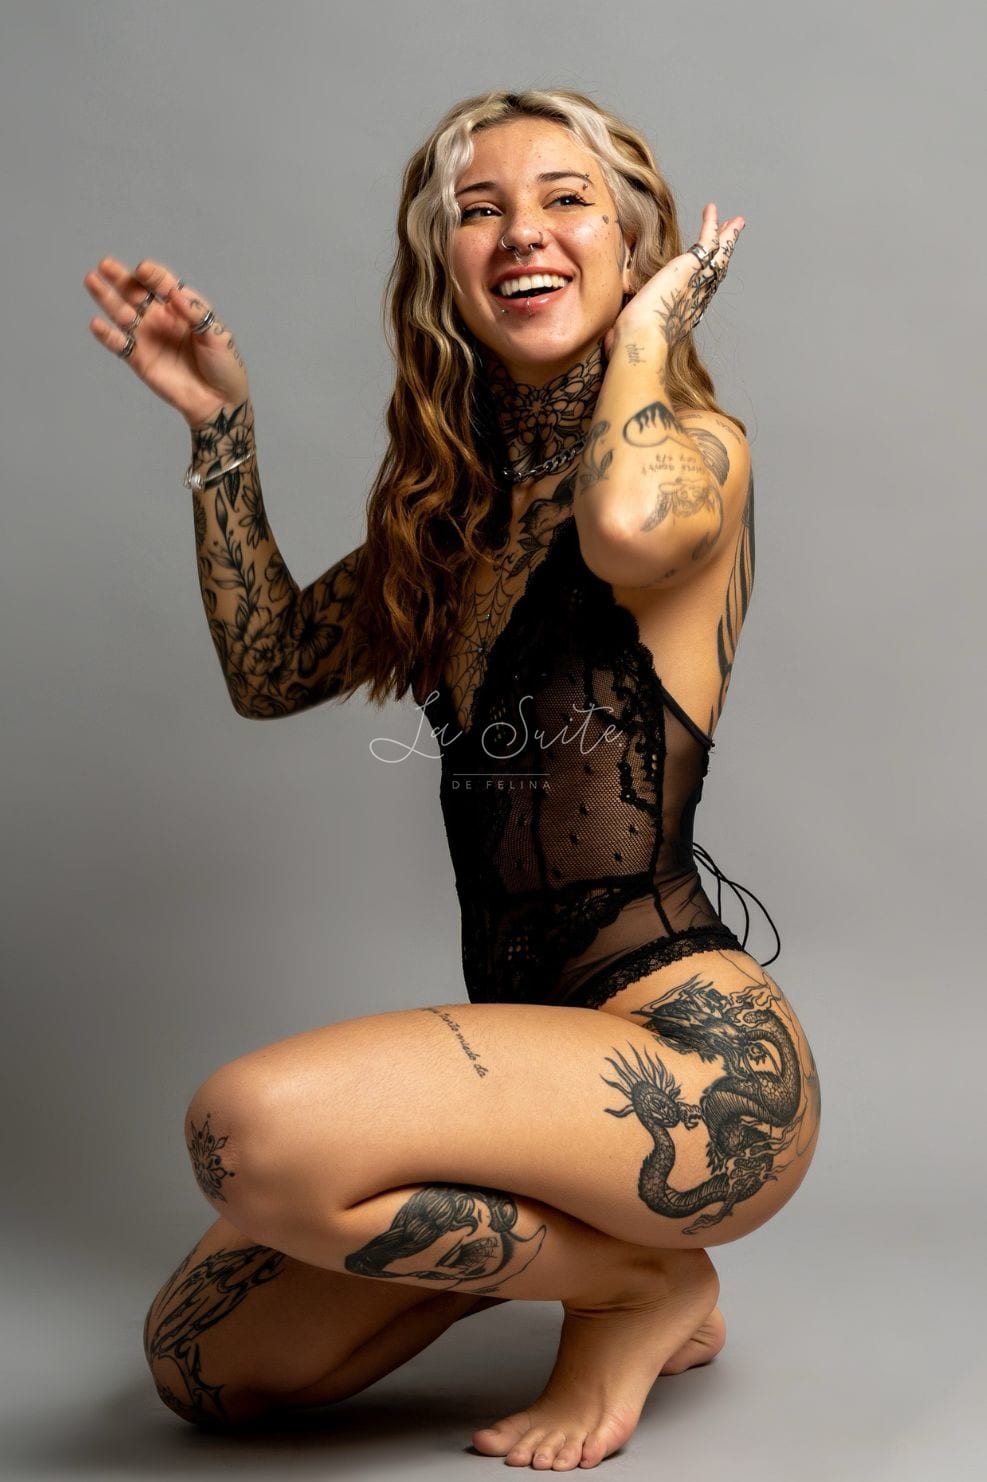 Escort bionda tatuata in lingerie nera, Franchesca